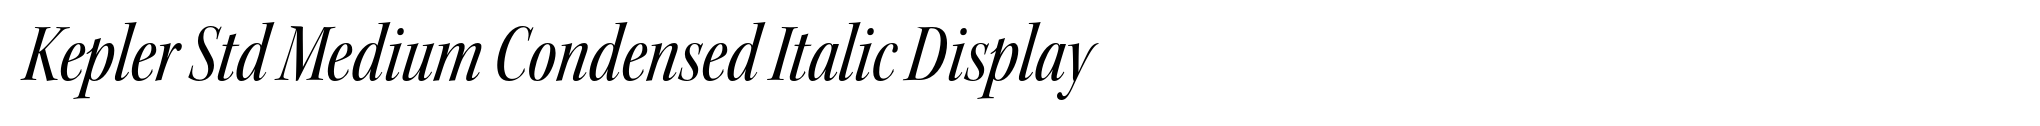 Kepler Std Medium Condensed Italic Display image